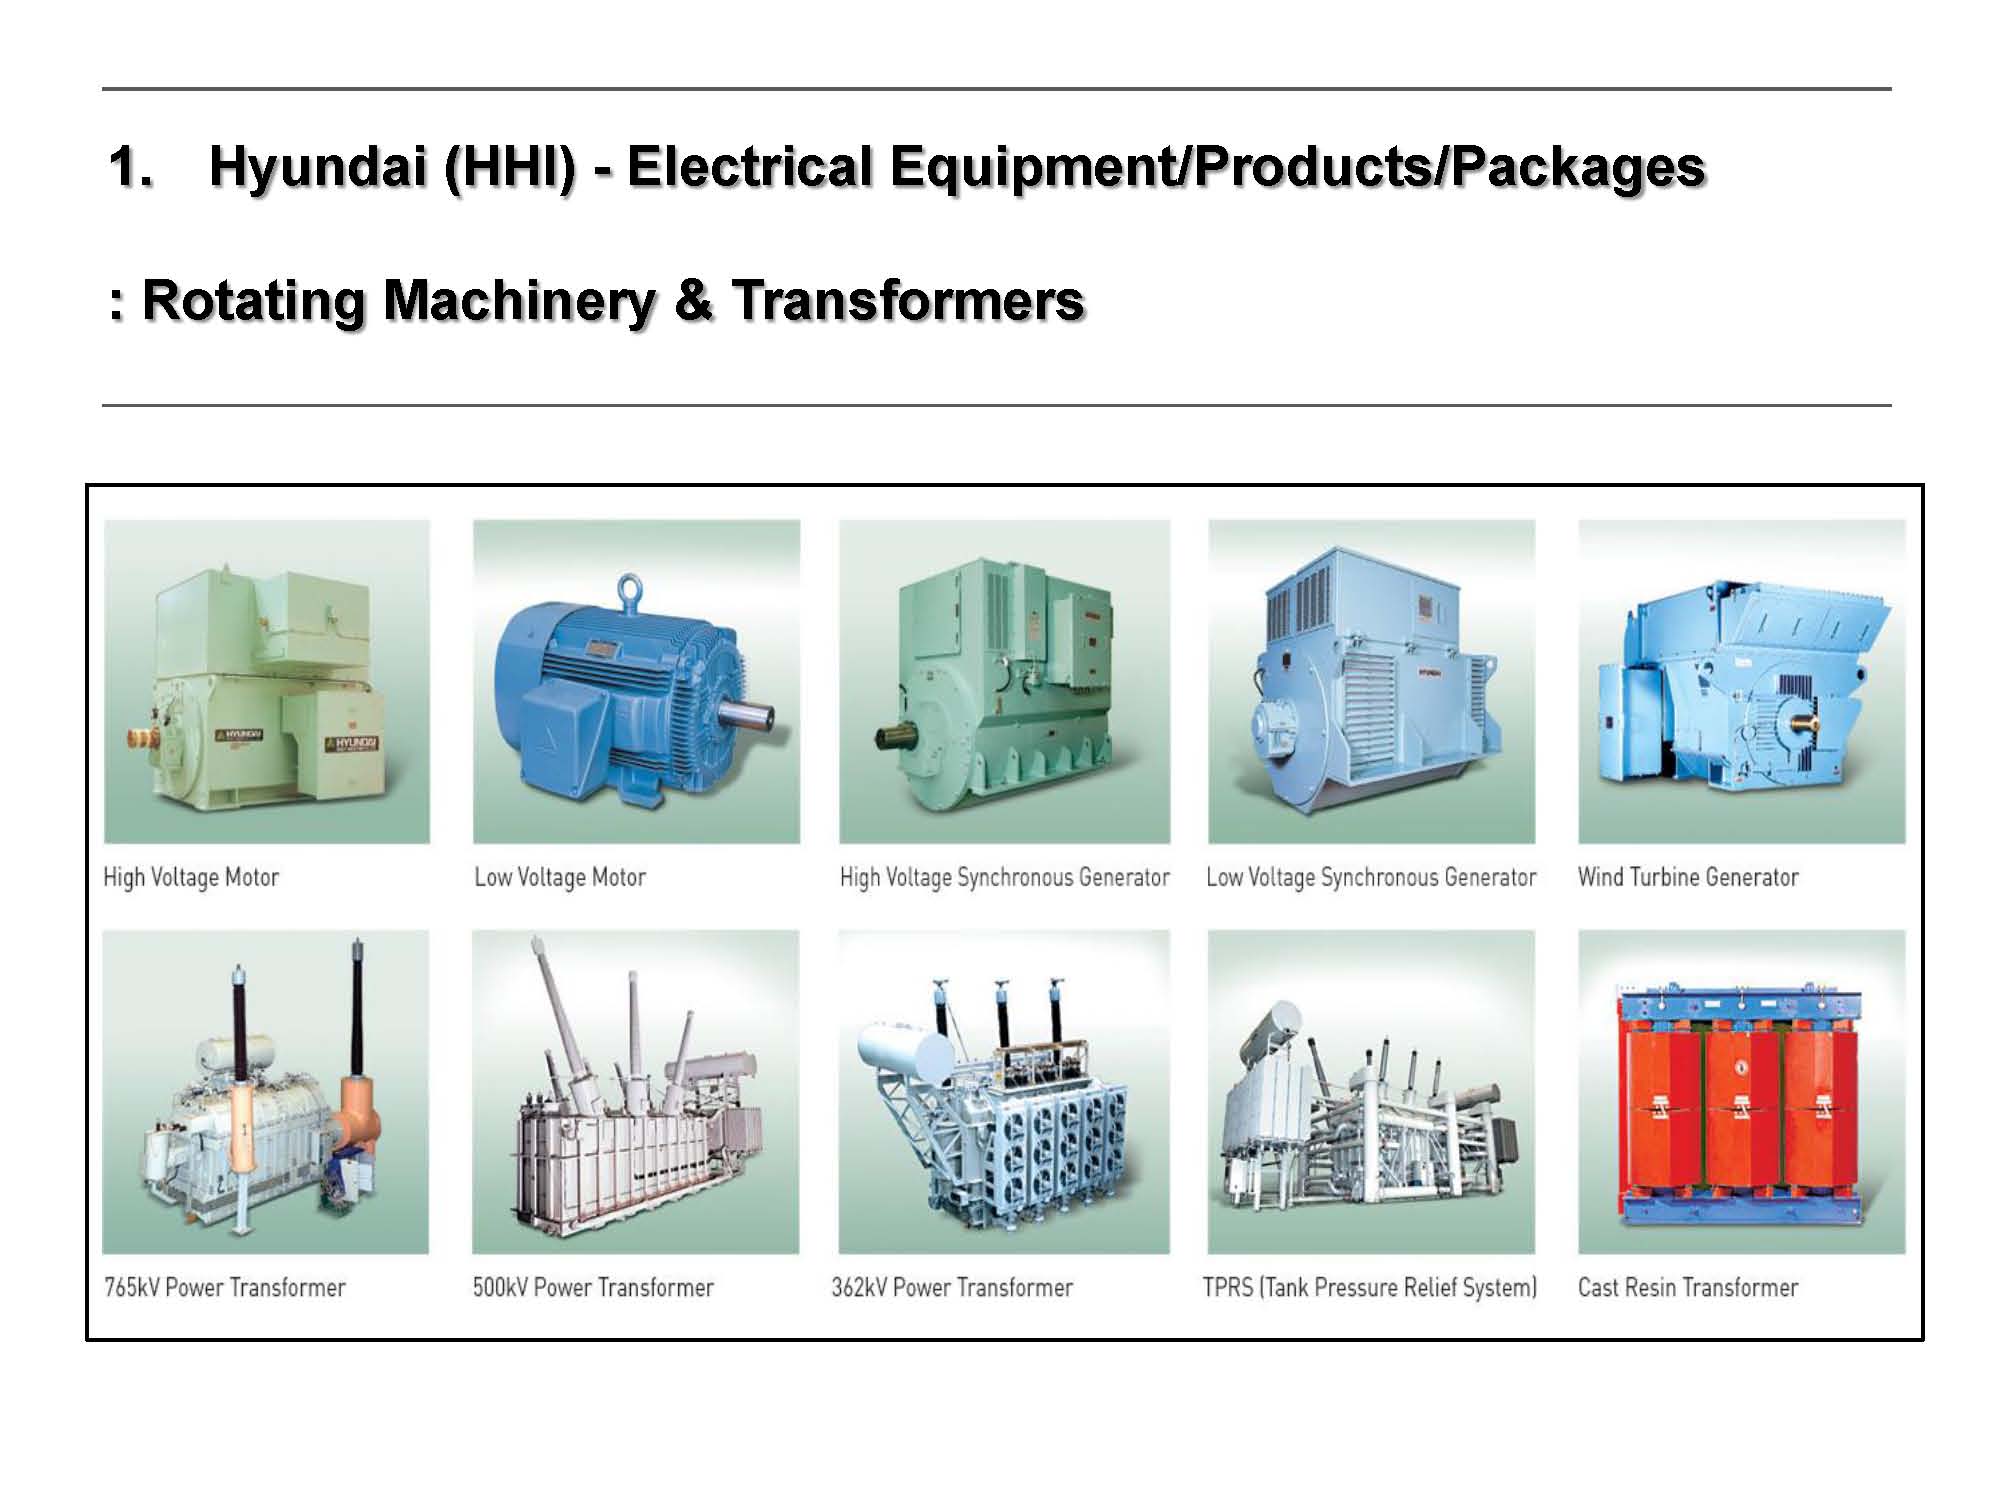 Hyundai Electrical Equipment (Motor, Trans... Made in Korea